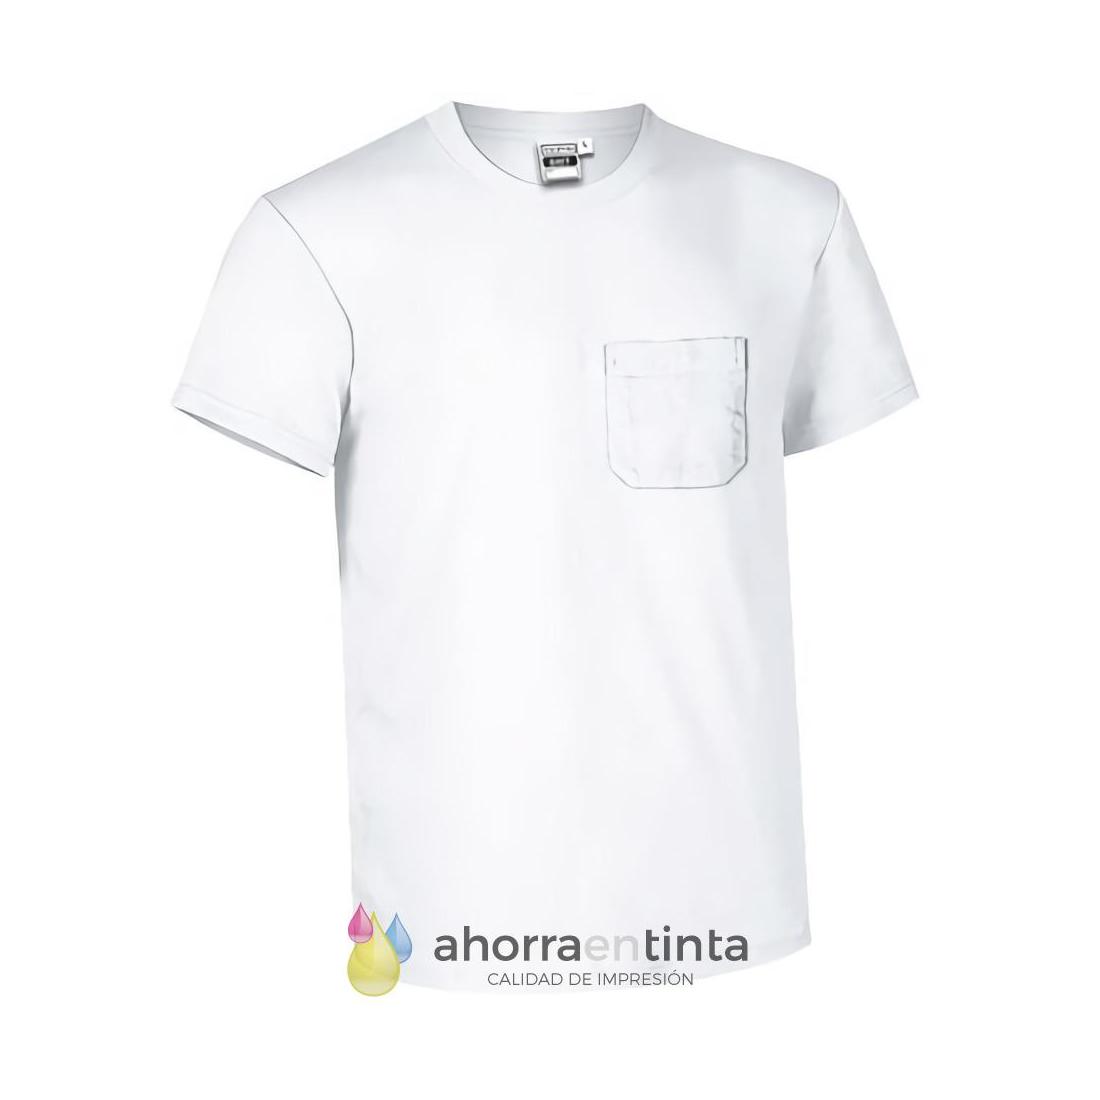 Preludio Generalmente hablando Siete Camiseta mezcla poliéster/algodón blanca con bolsillo Valento Bret Unisex  Adulto